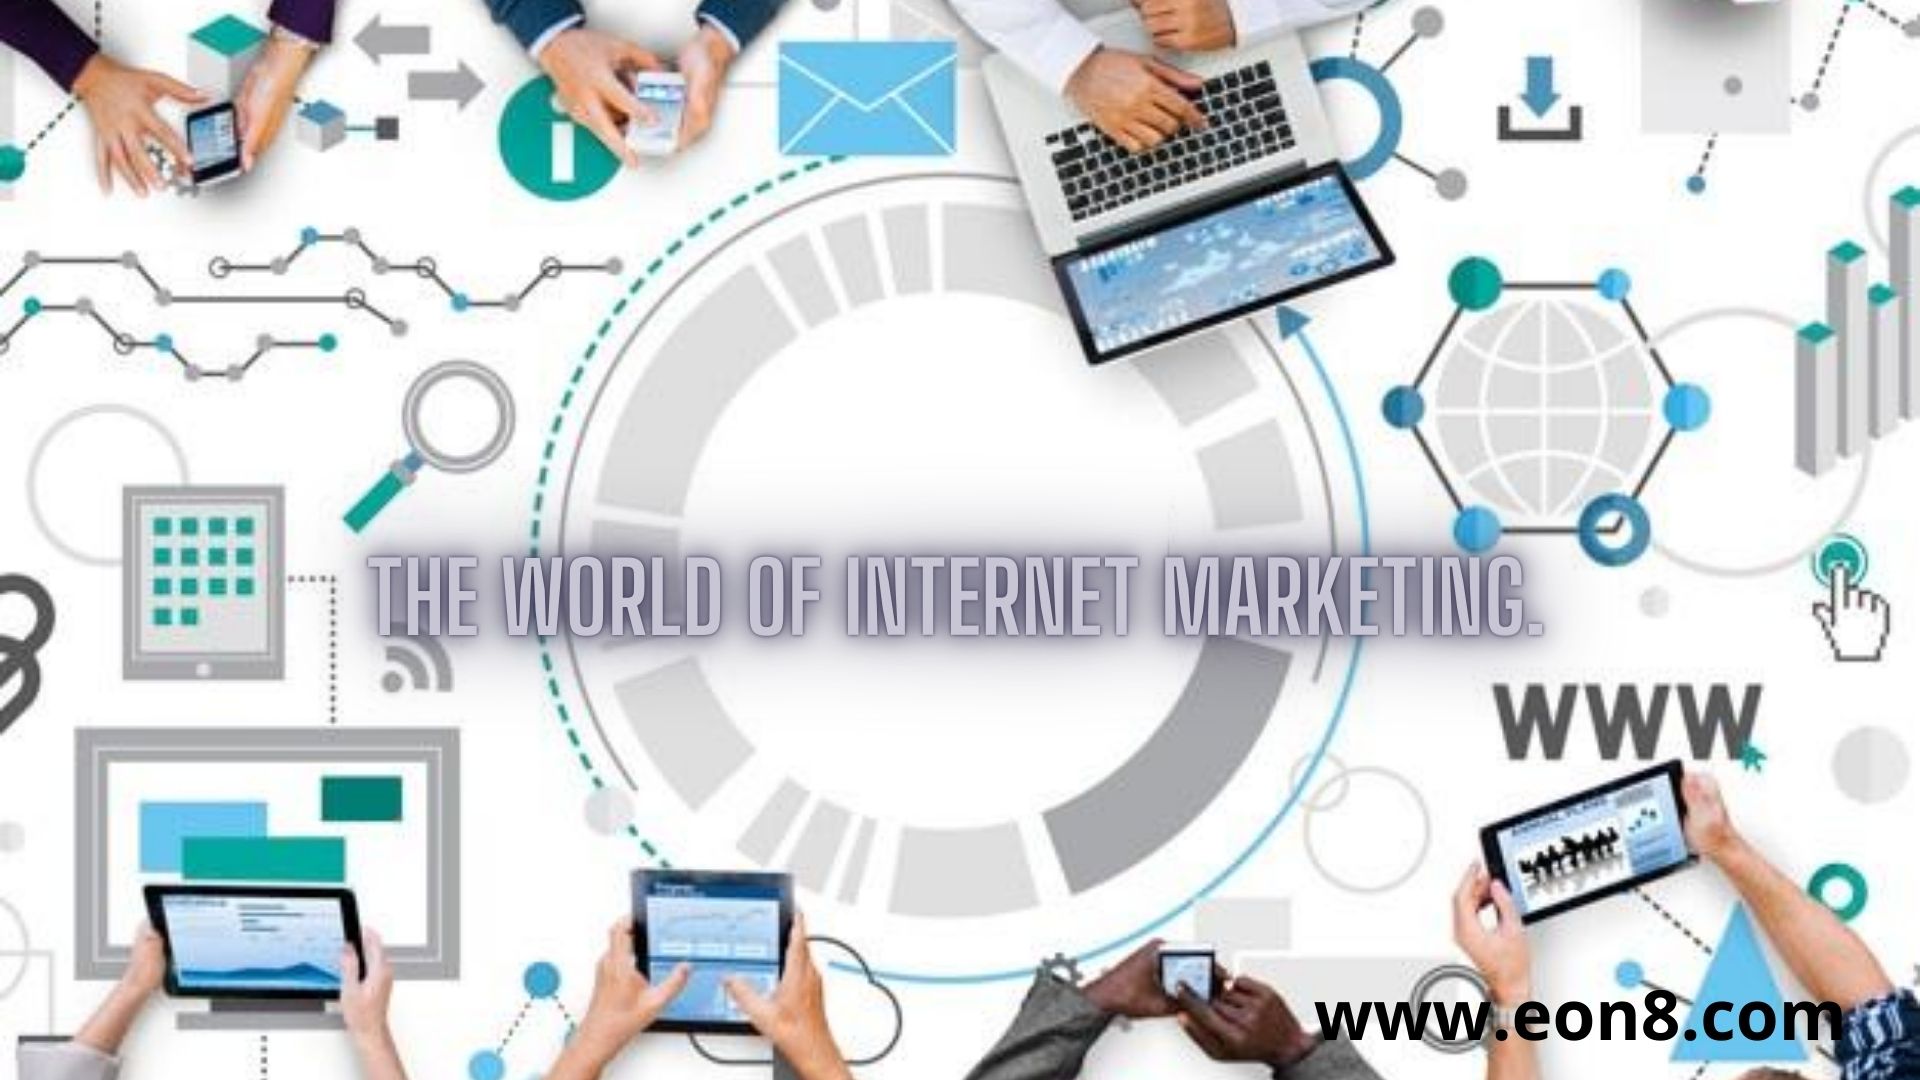 The World of Internet Marketing